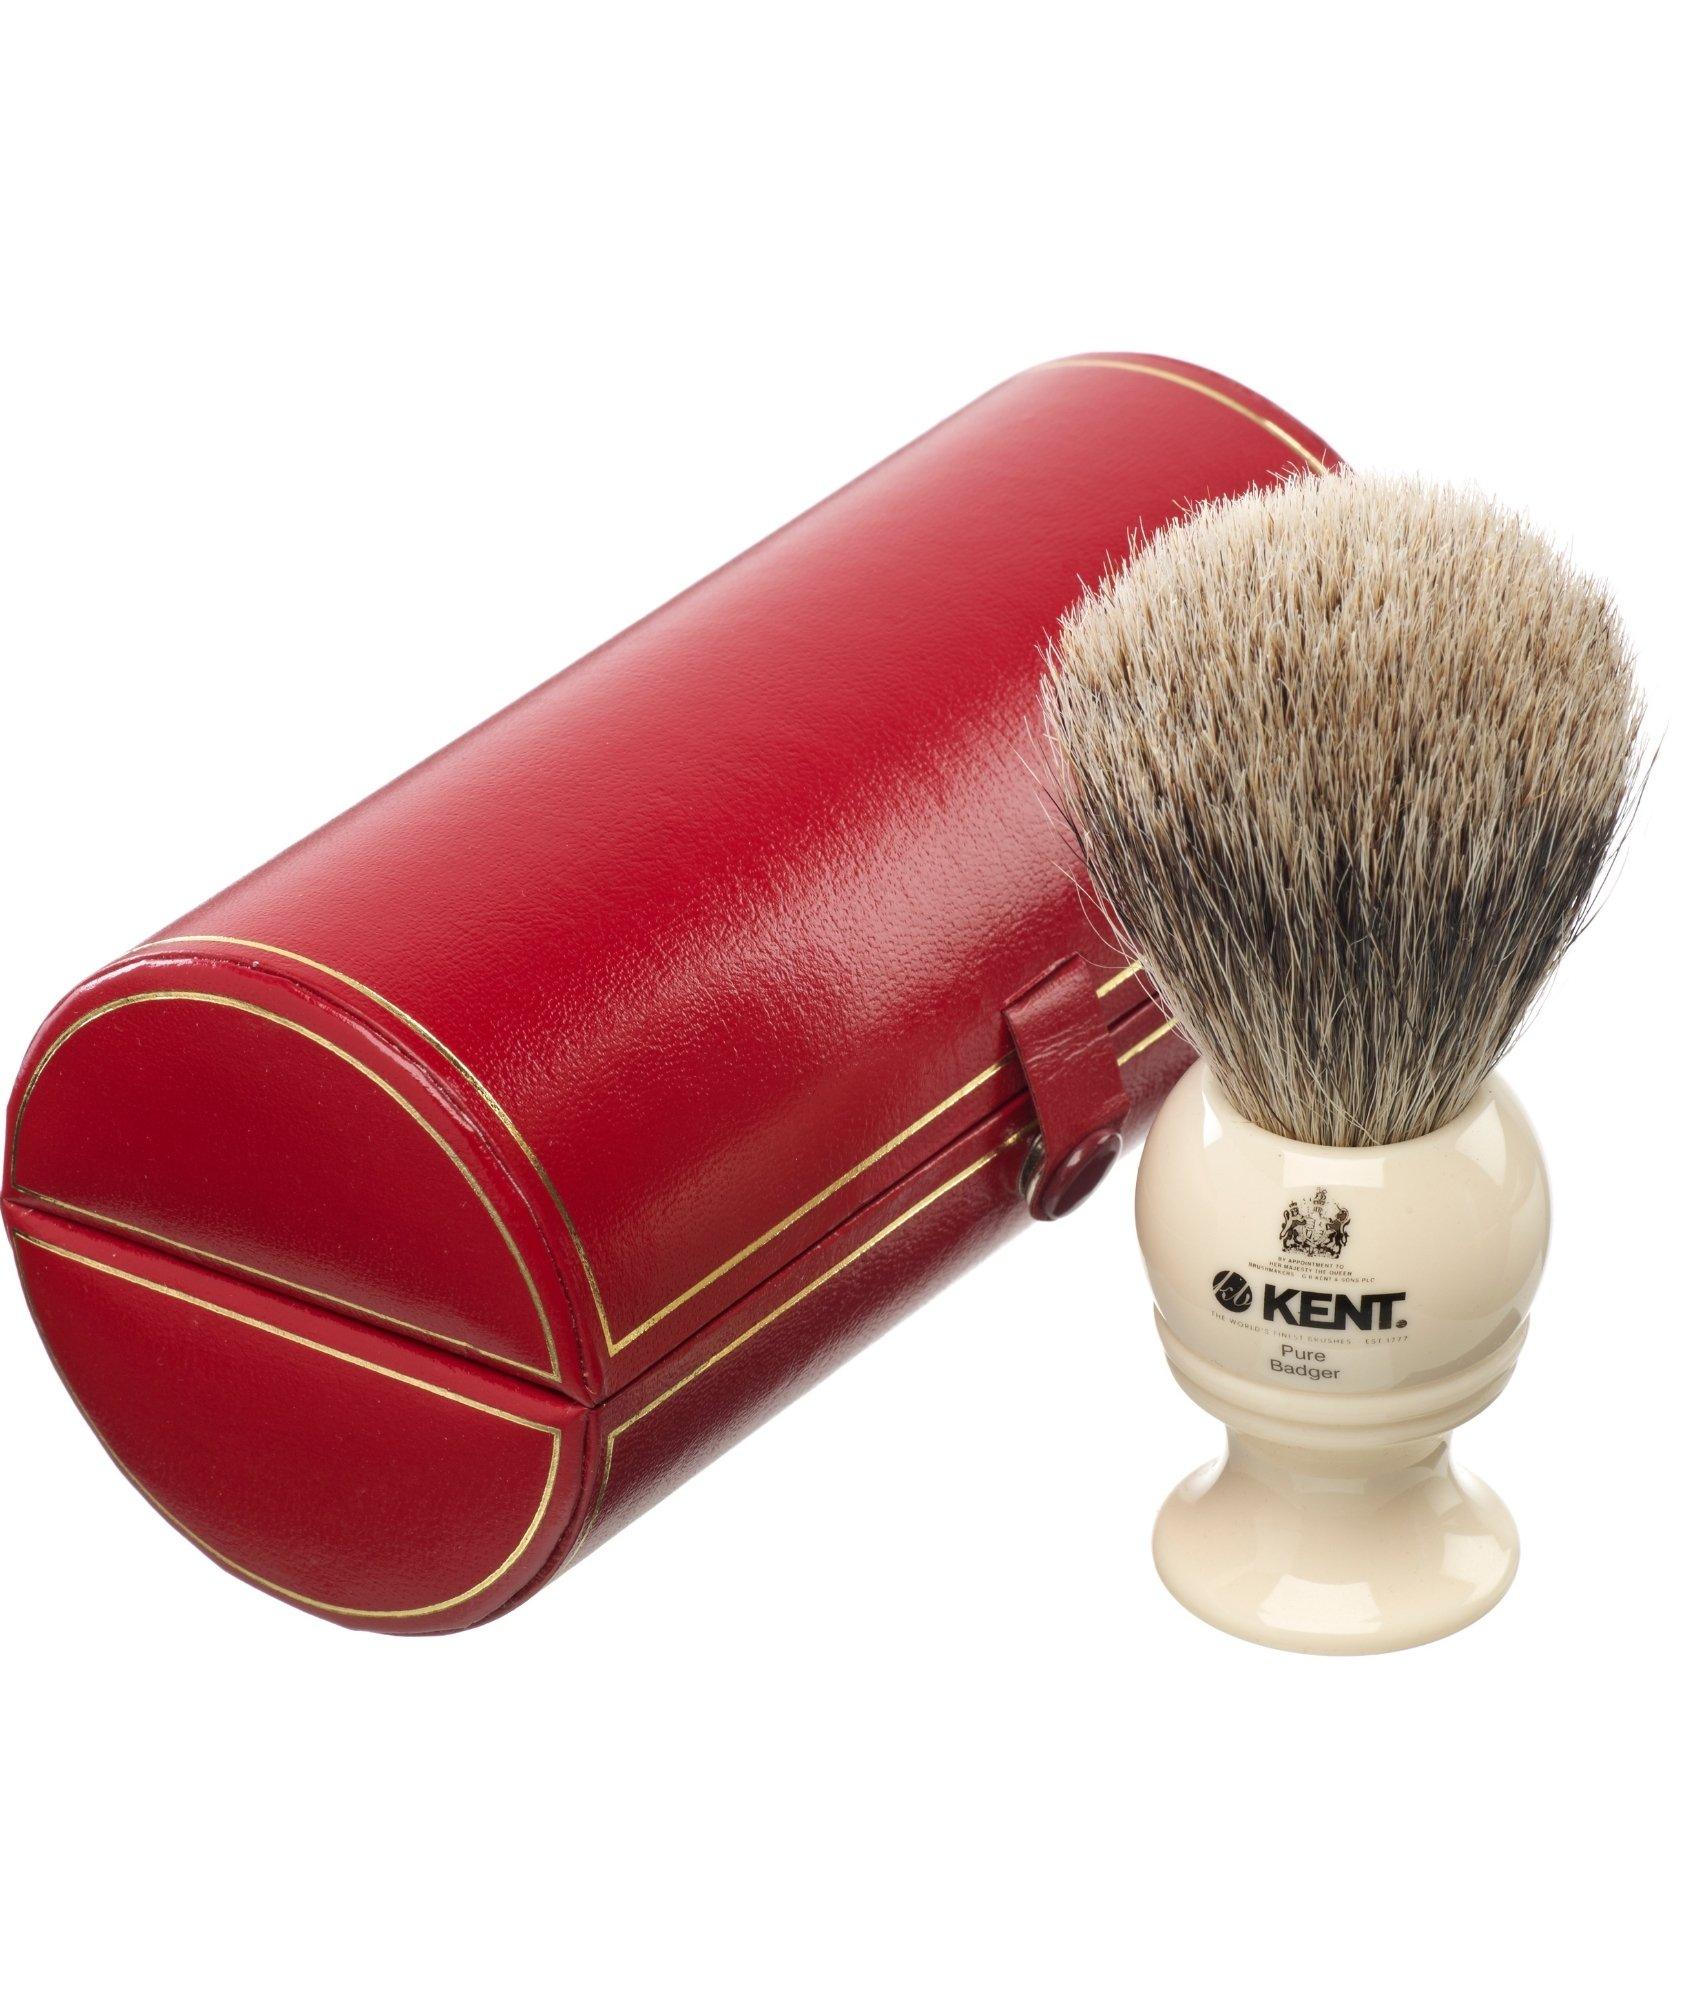 Kent Shaving Brush, Pure Grey Badger, Medium image 0